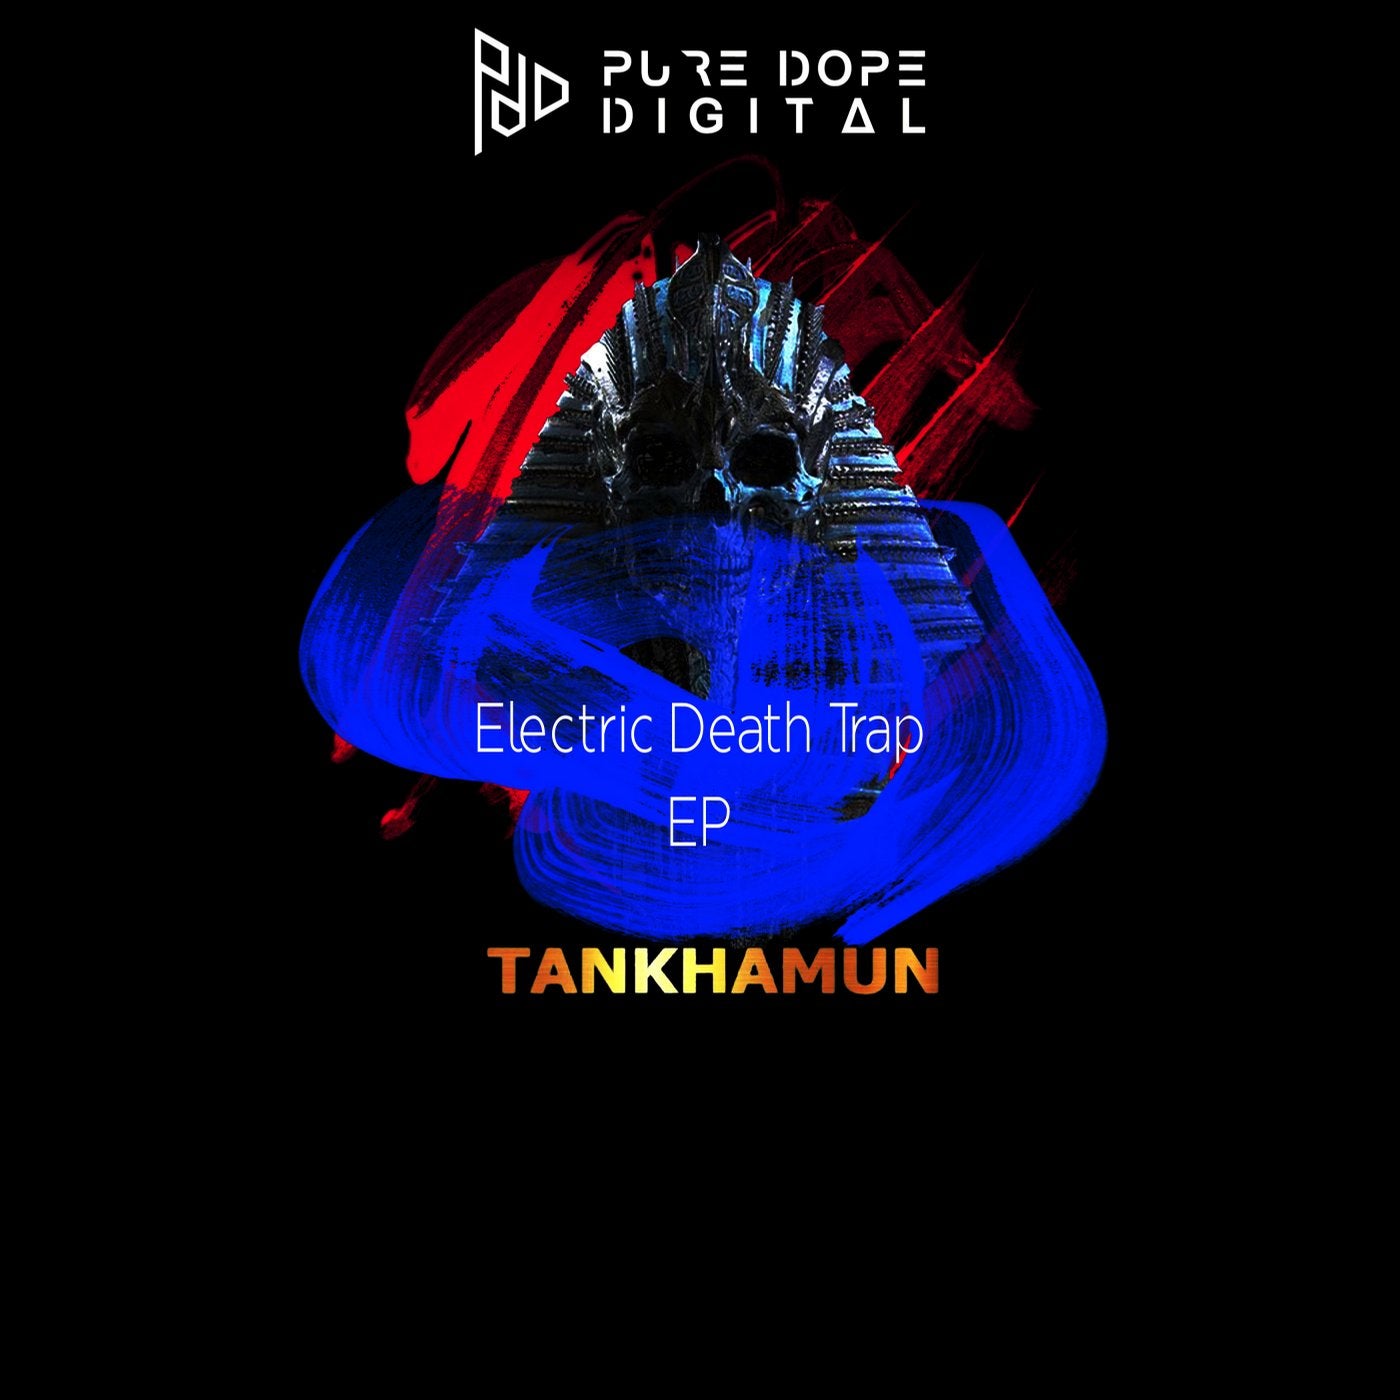 Electric Death Trap EP